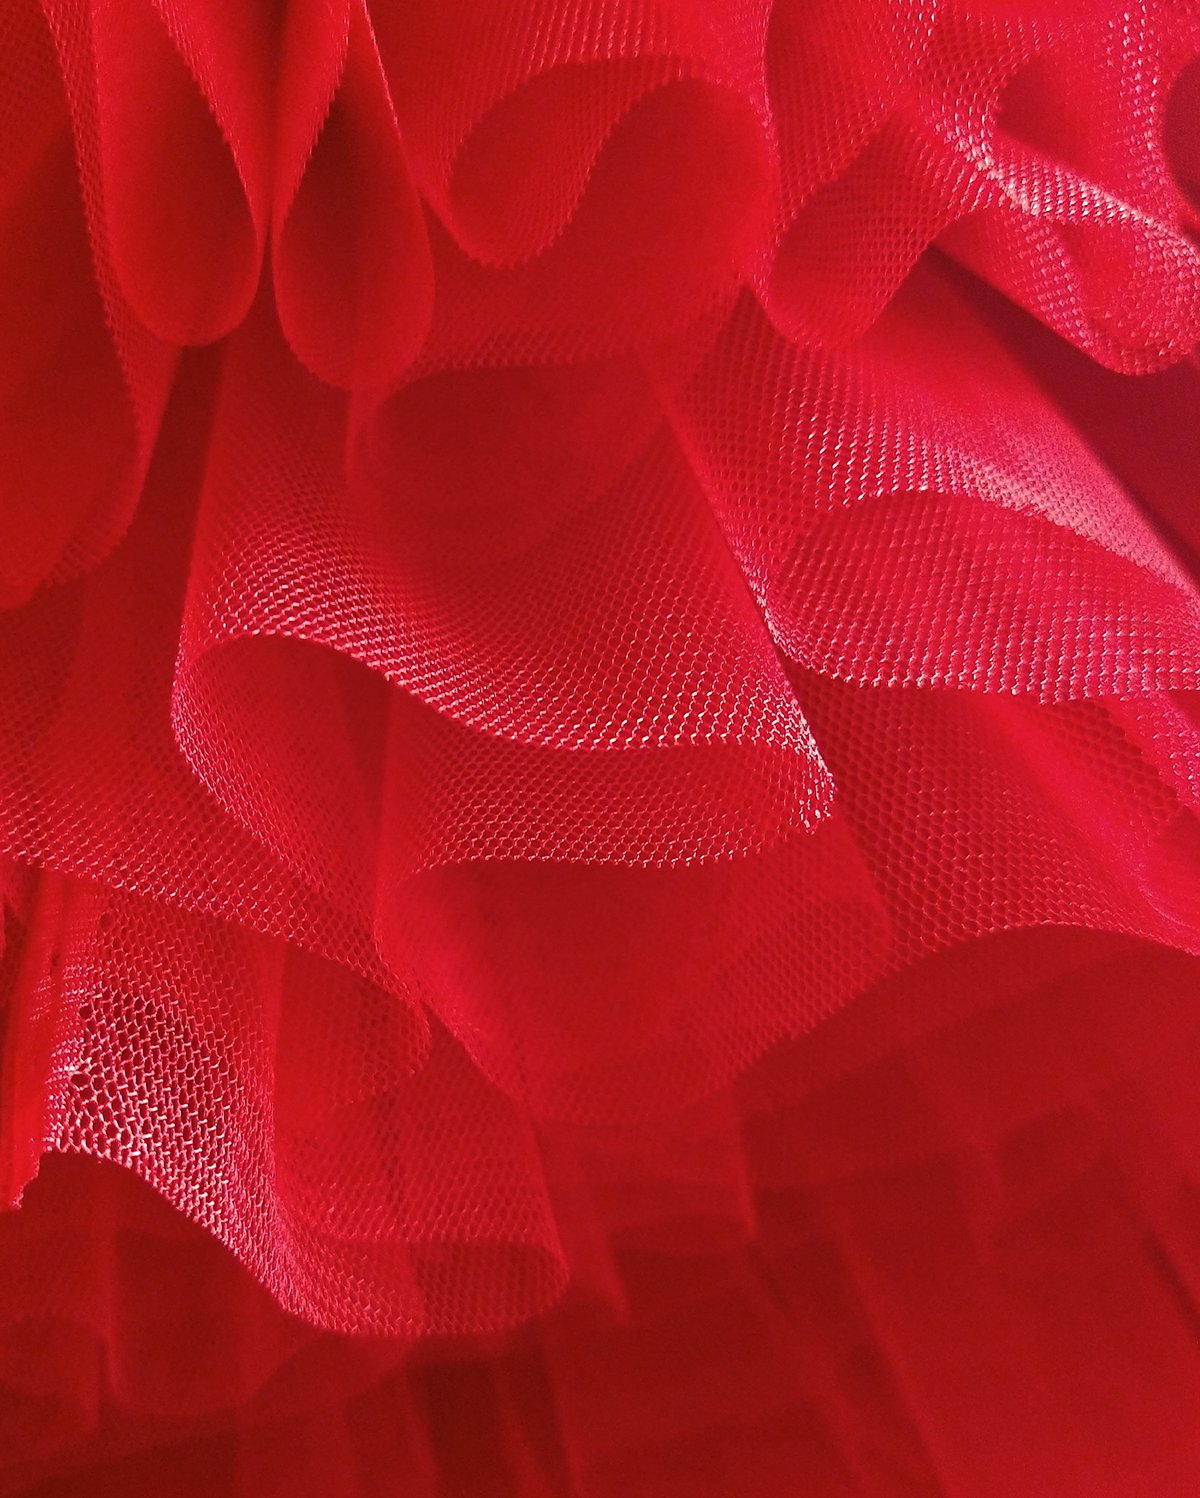 Close-up tutu tulle fabric red